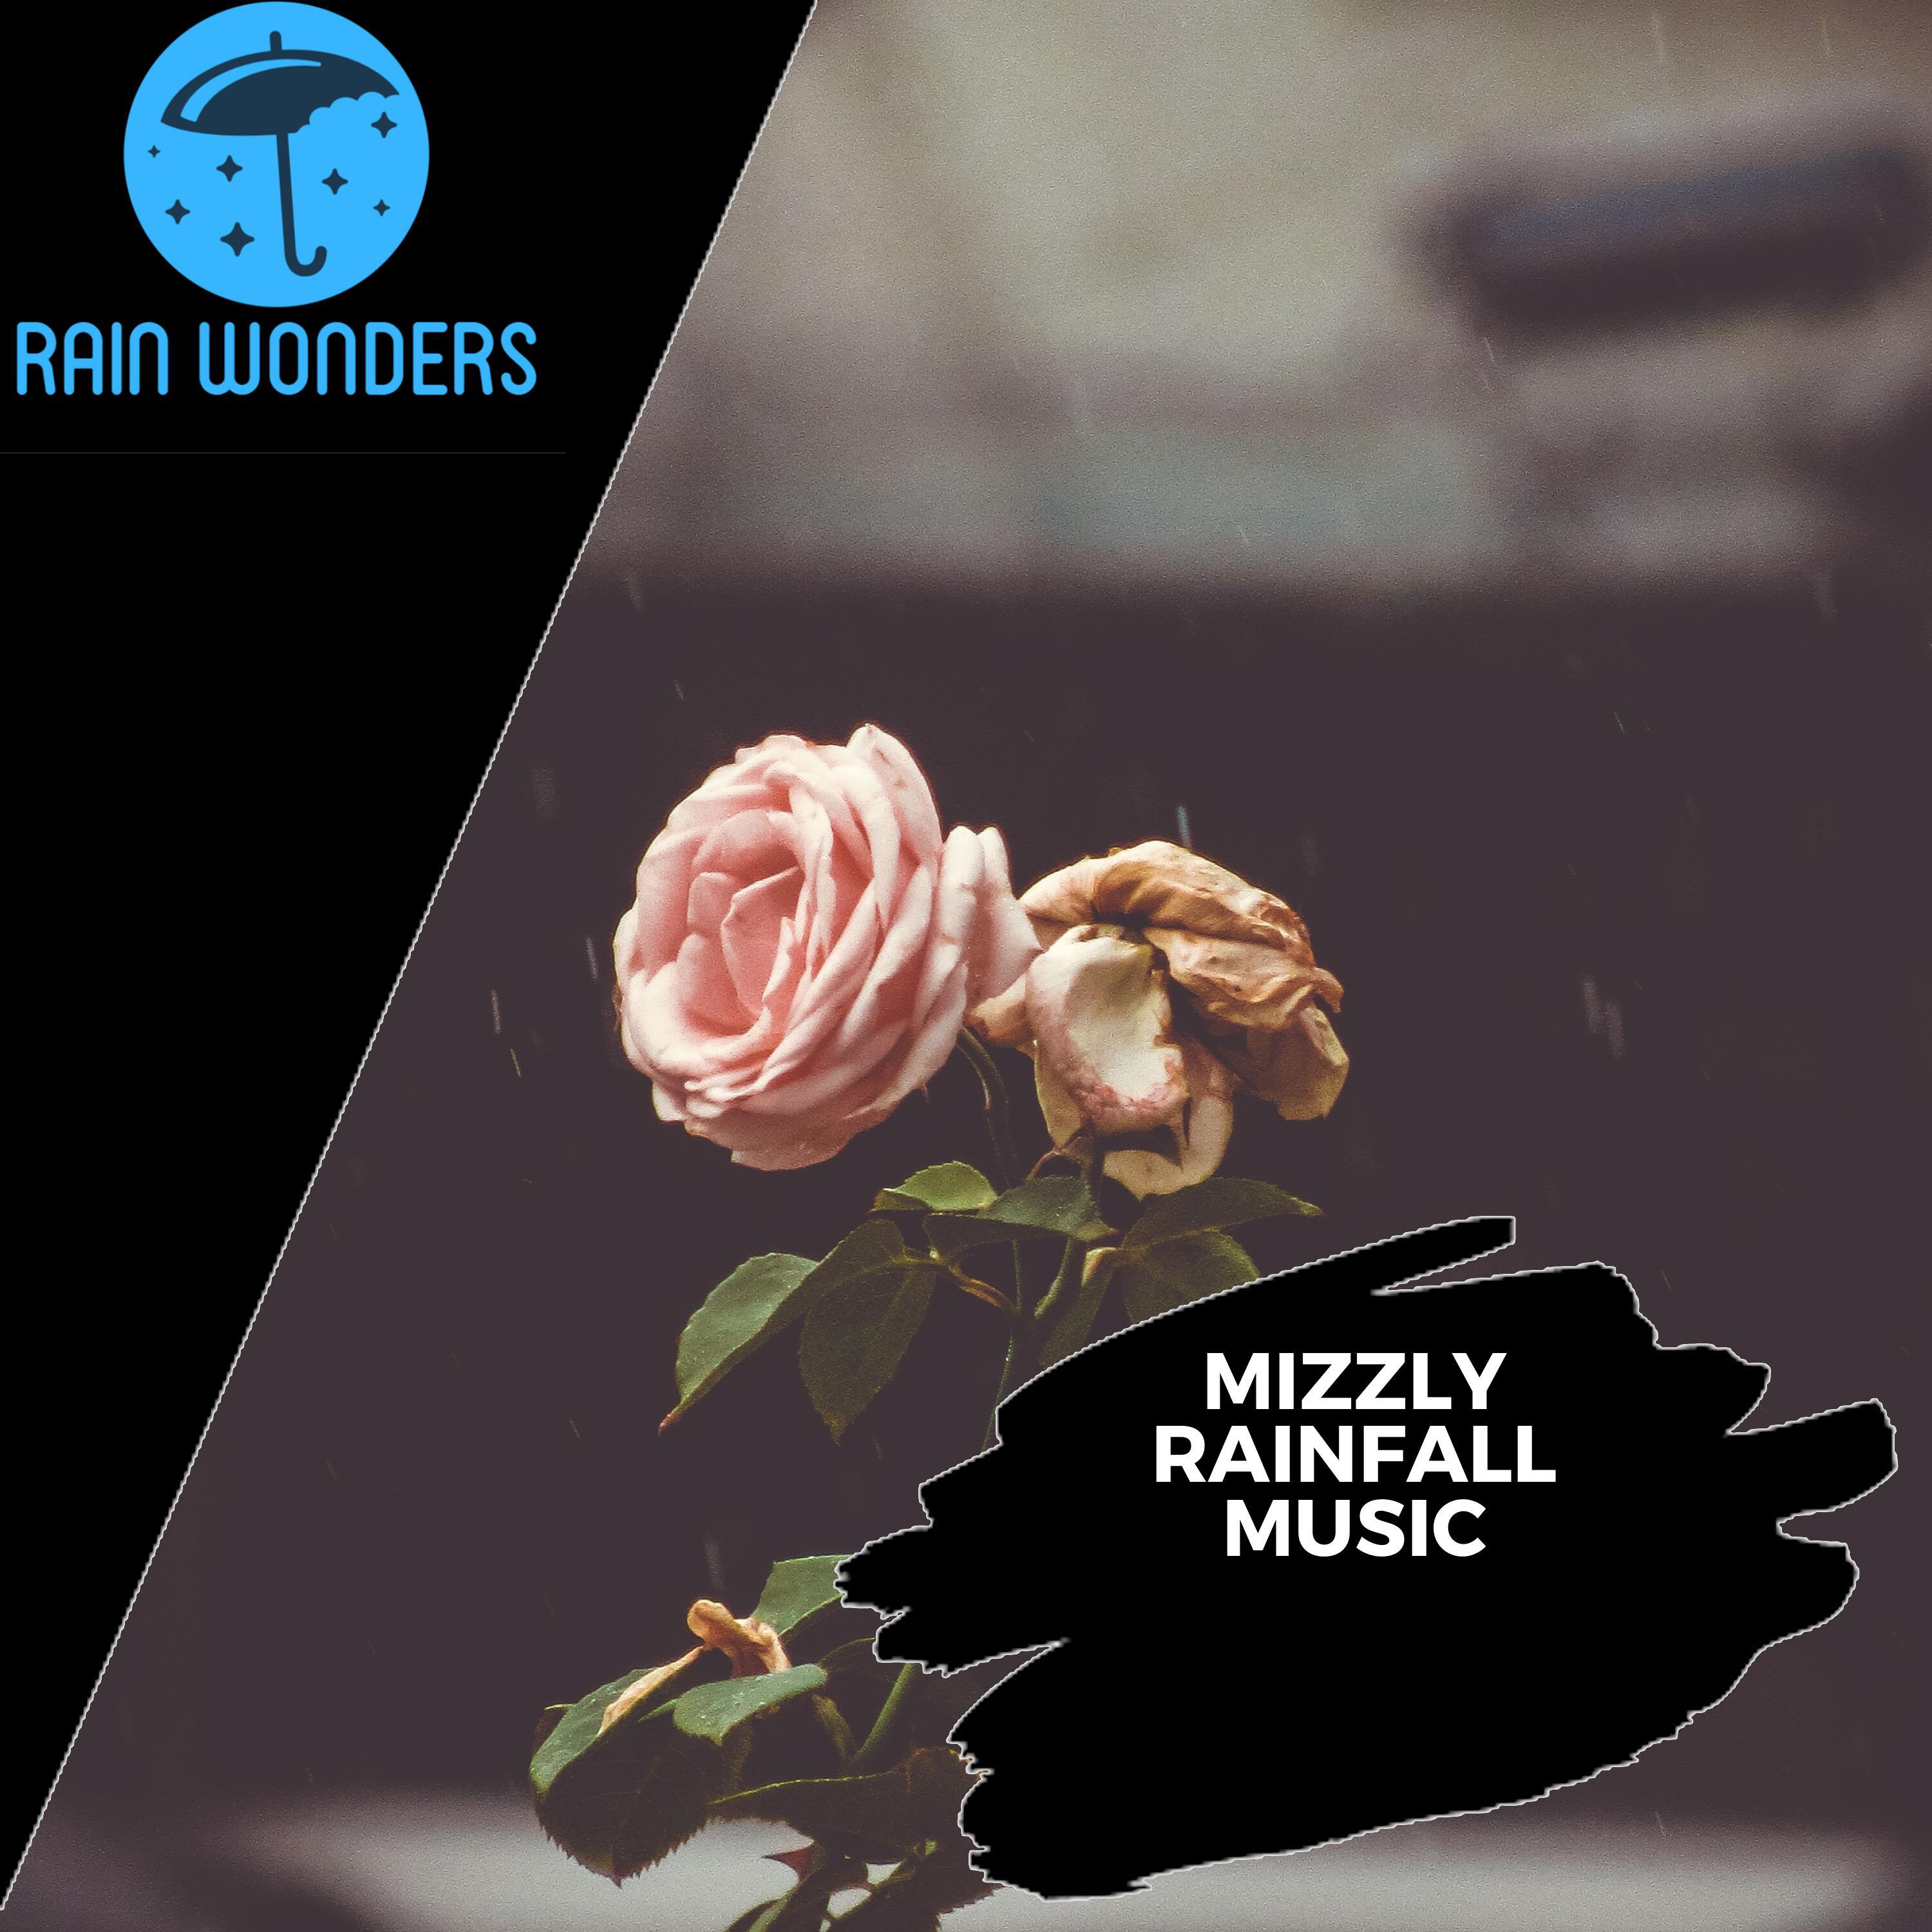 Floody Rain Nature Music - Global Moderate Light Rain Thunderstorm